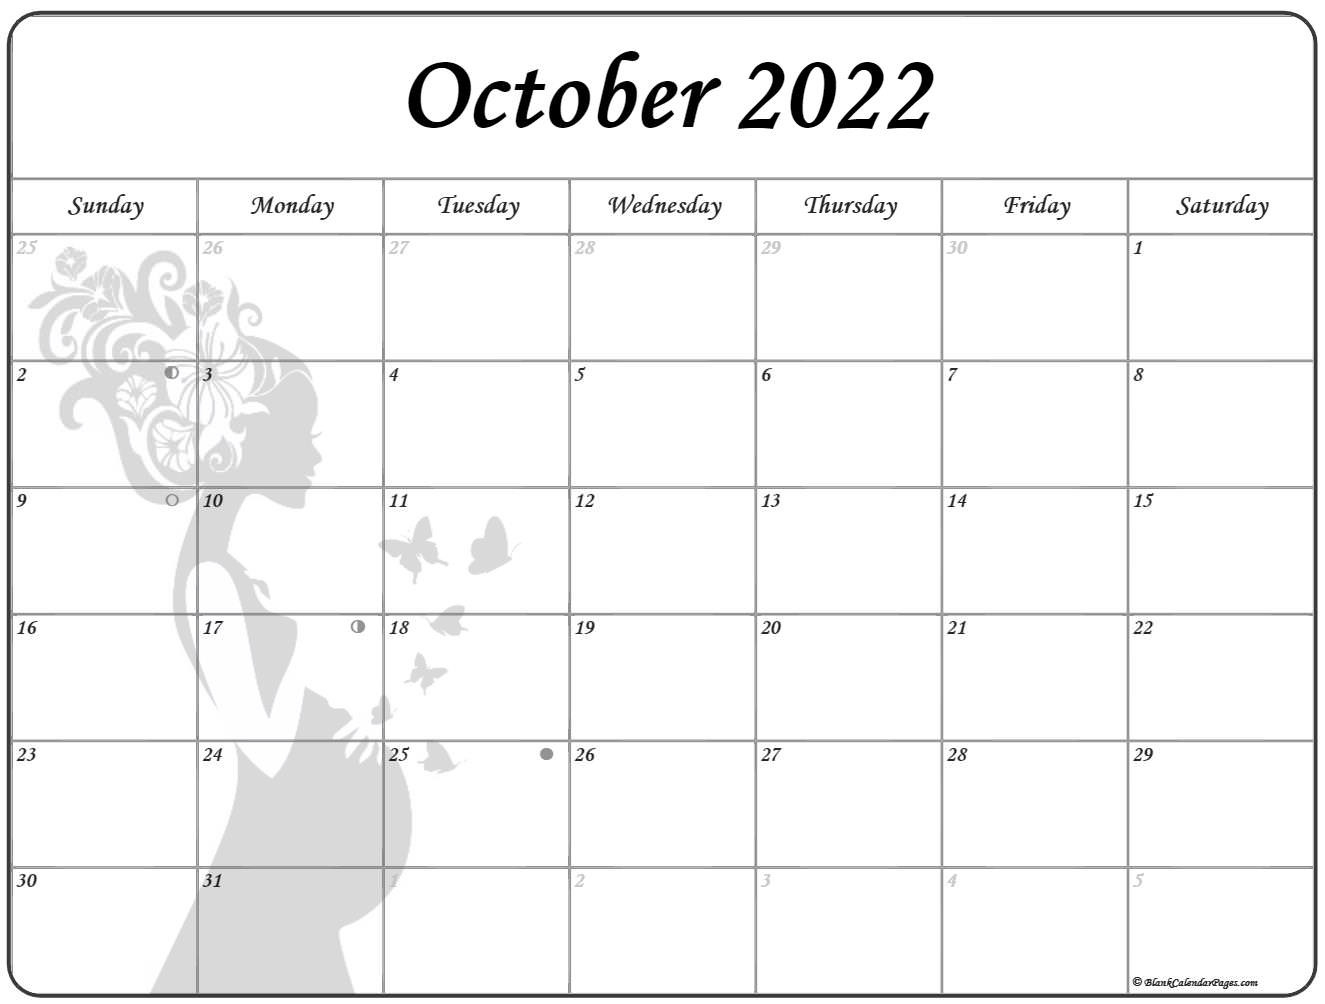 October 2022 Pregnancy Calendar | Fertility Calendar  Moon Calendar June 2022